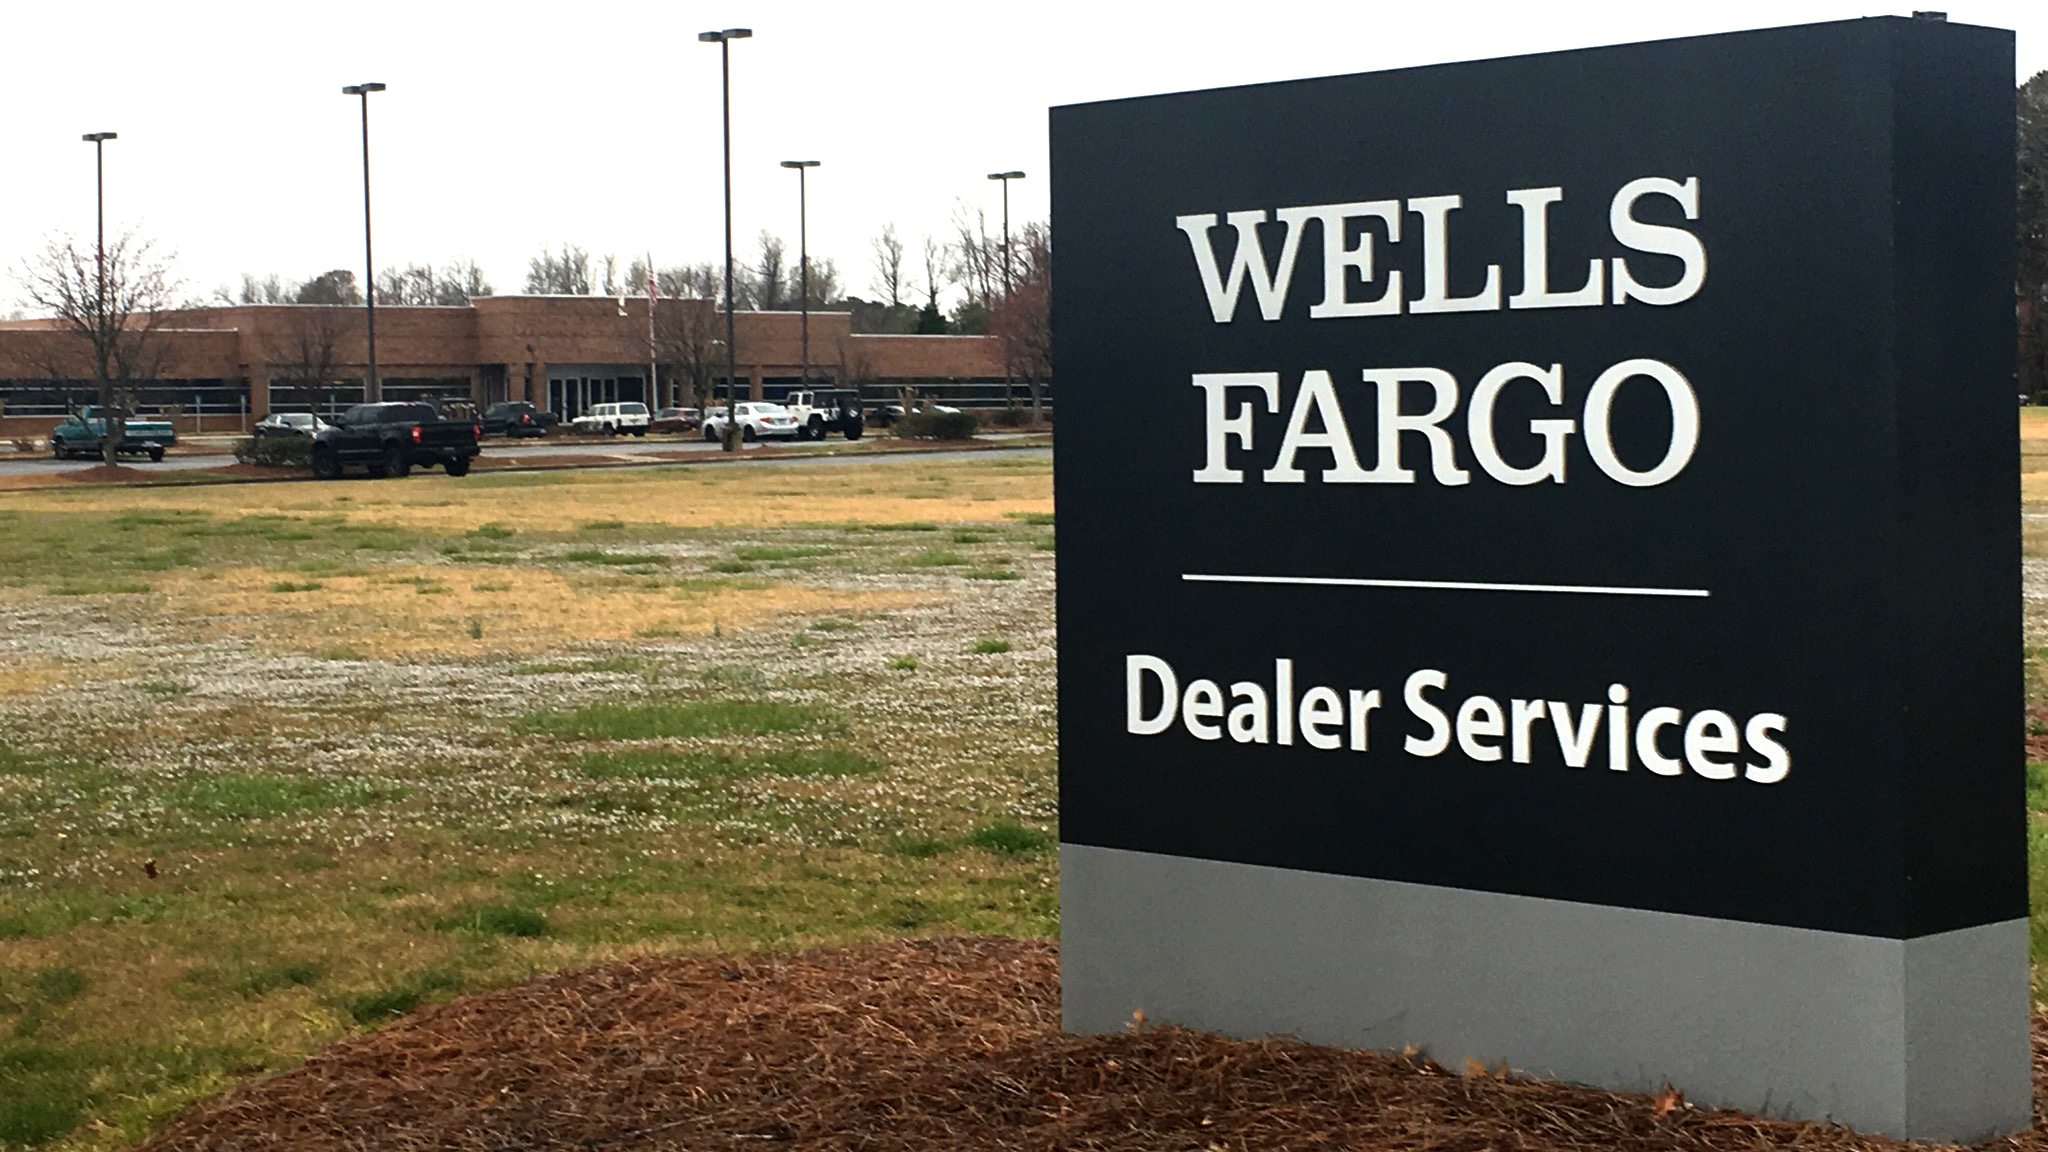 wells fargo dealer services sign